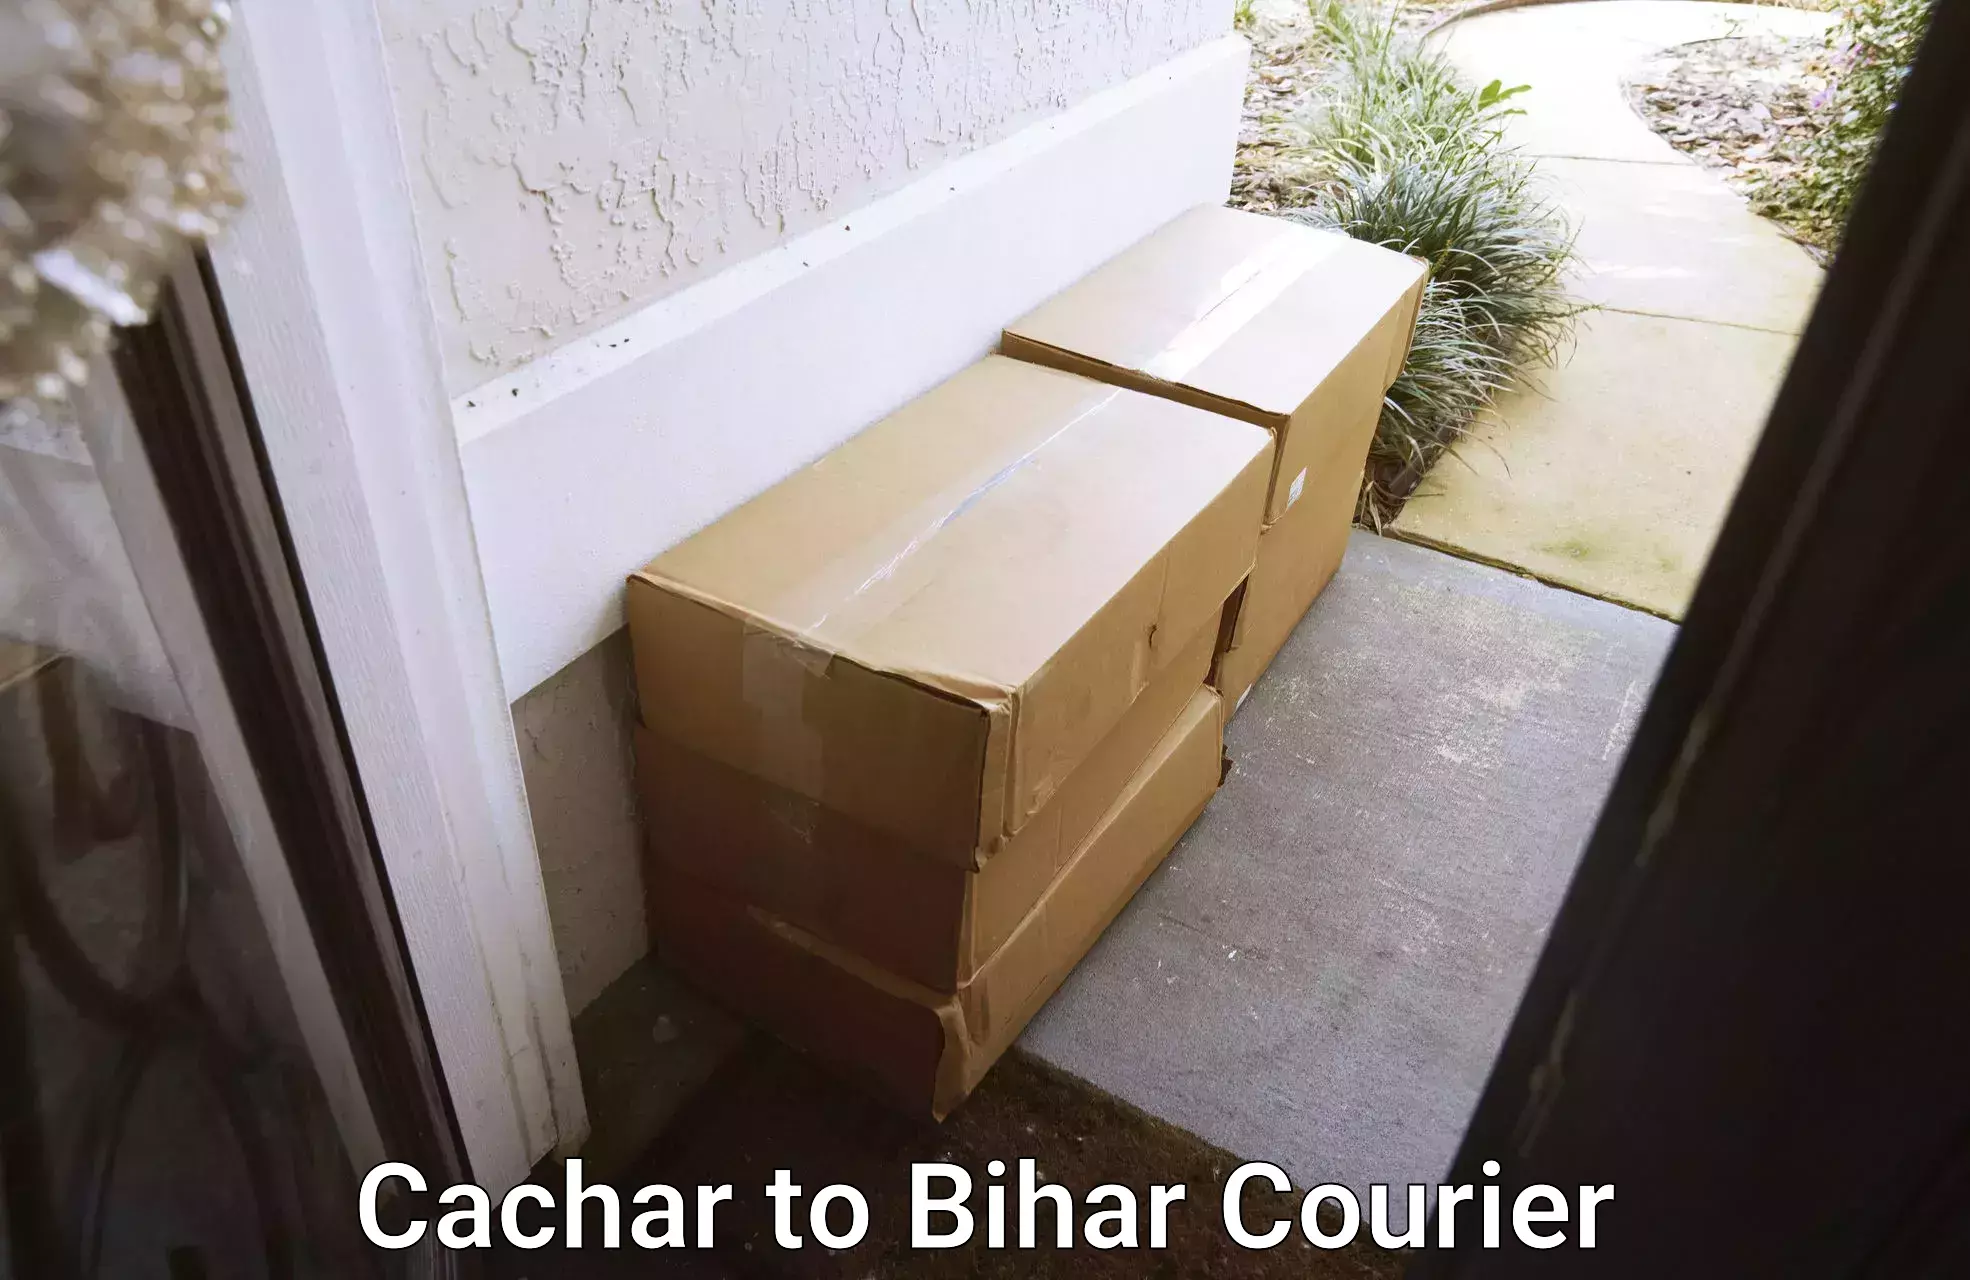 E-commerce fulfillment Cachar to Bihar